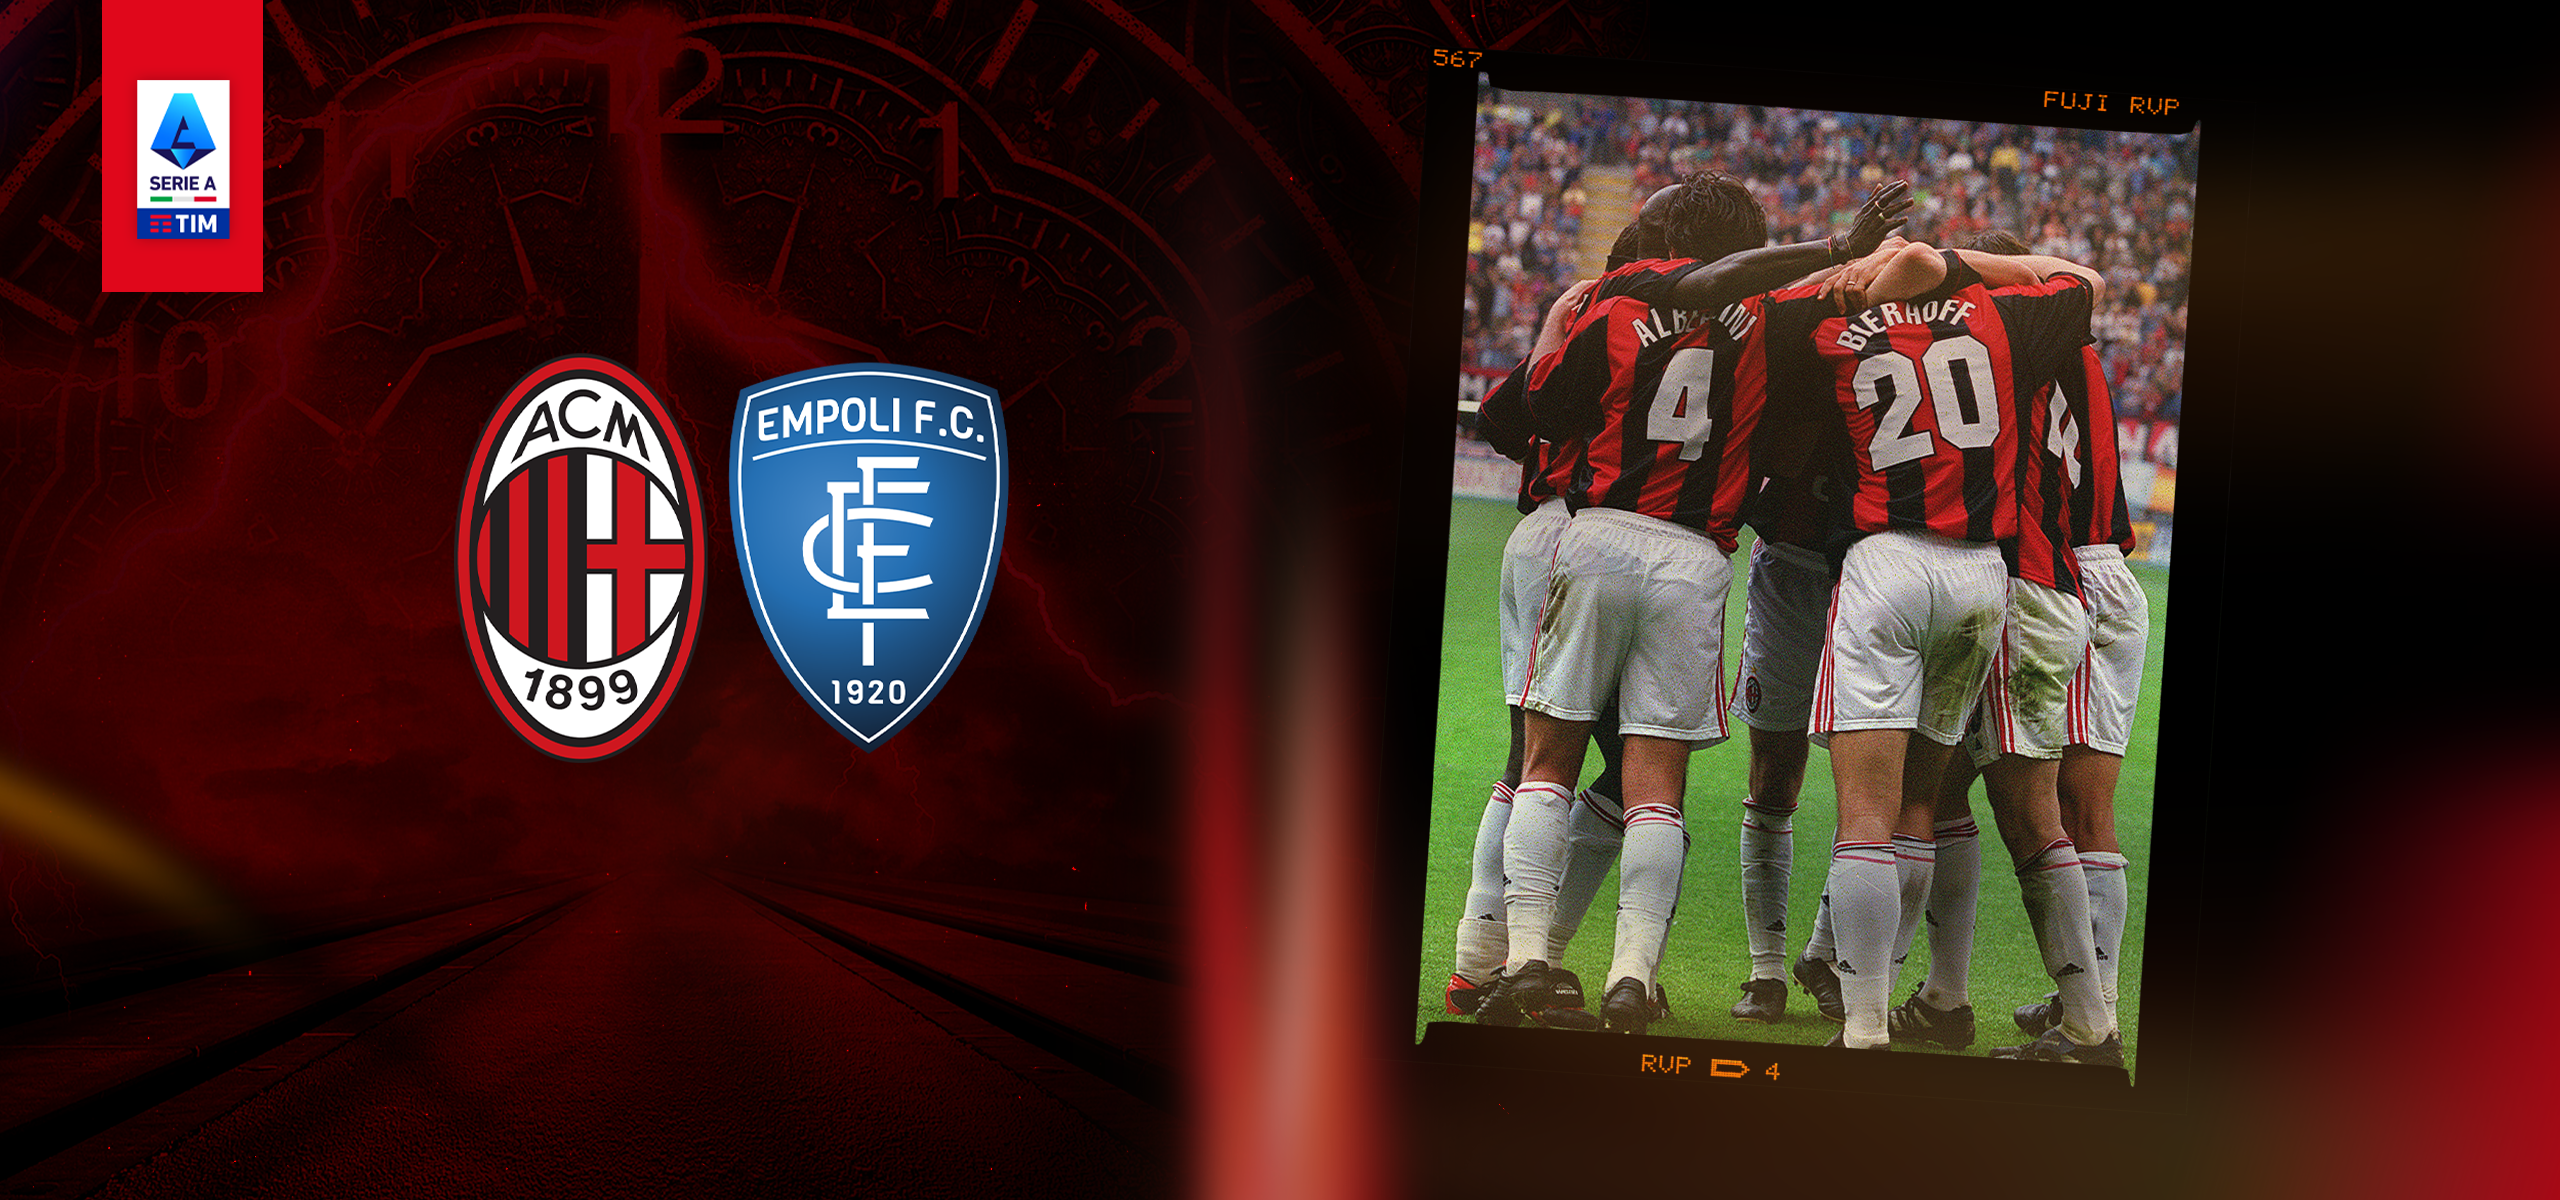 Genoa CFC v Empoli Tickets, 2 Dec 2023